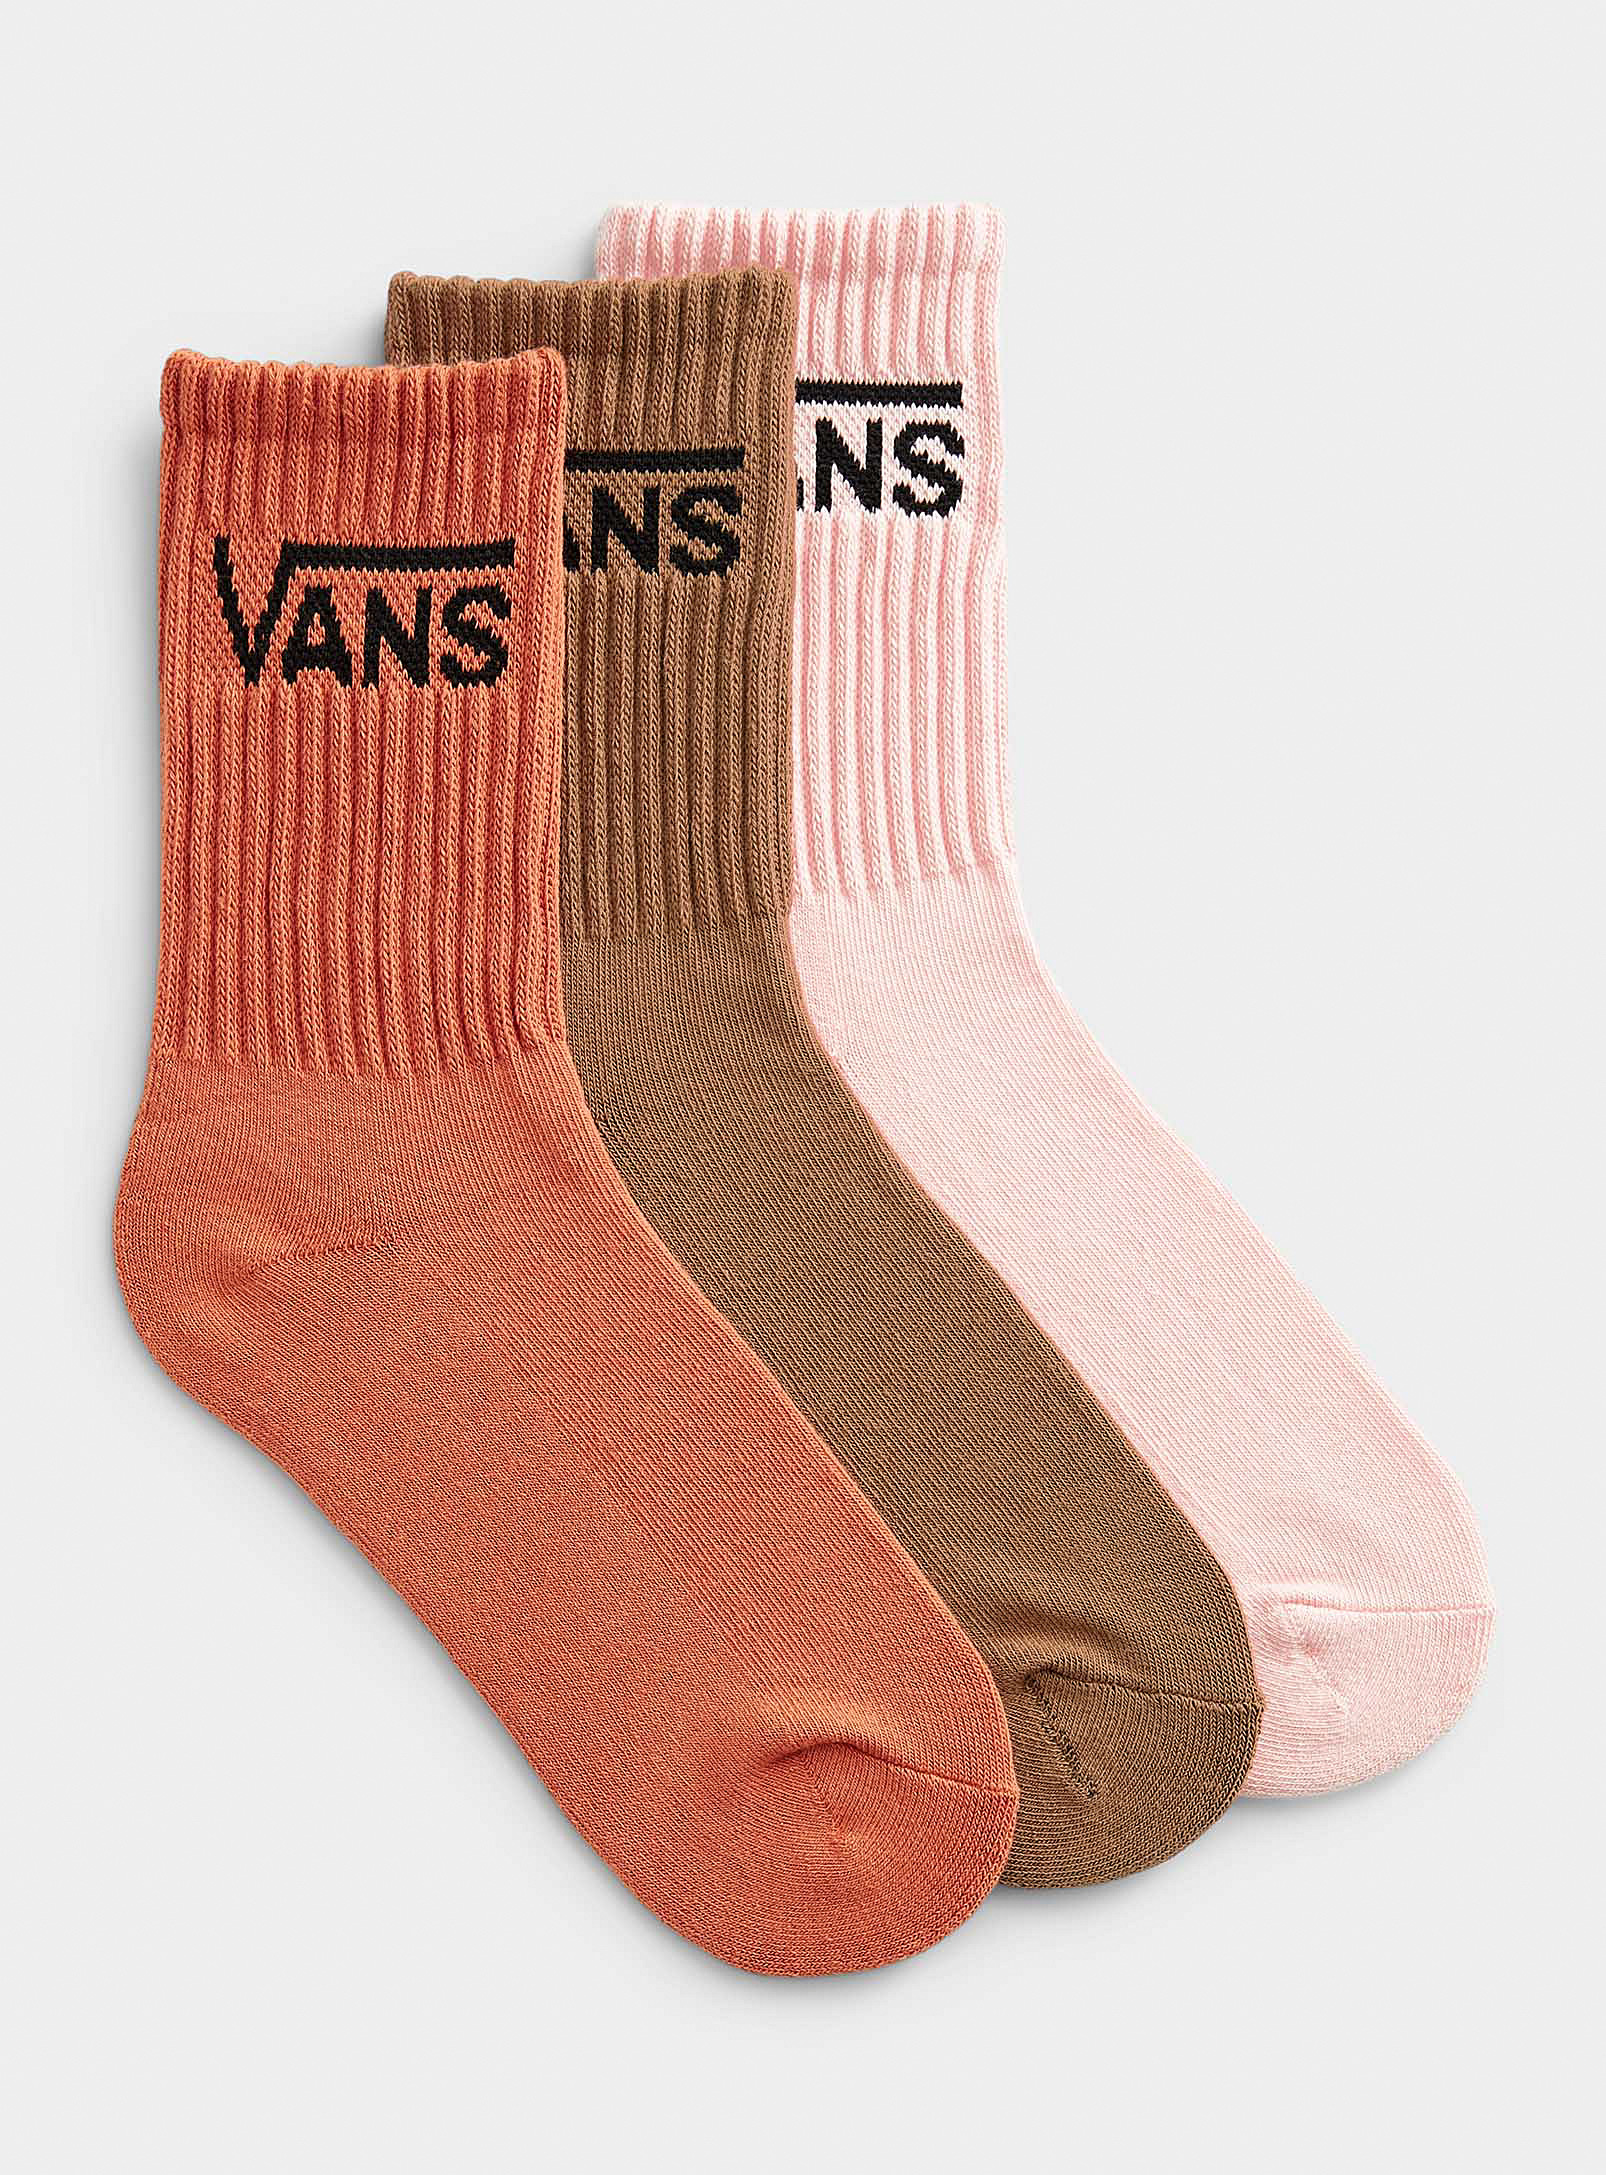 Vans Signature Ribbed Socks Set Of 3 In Orange